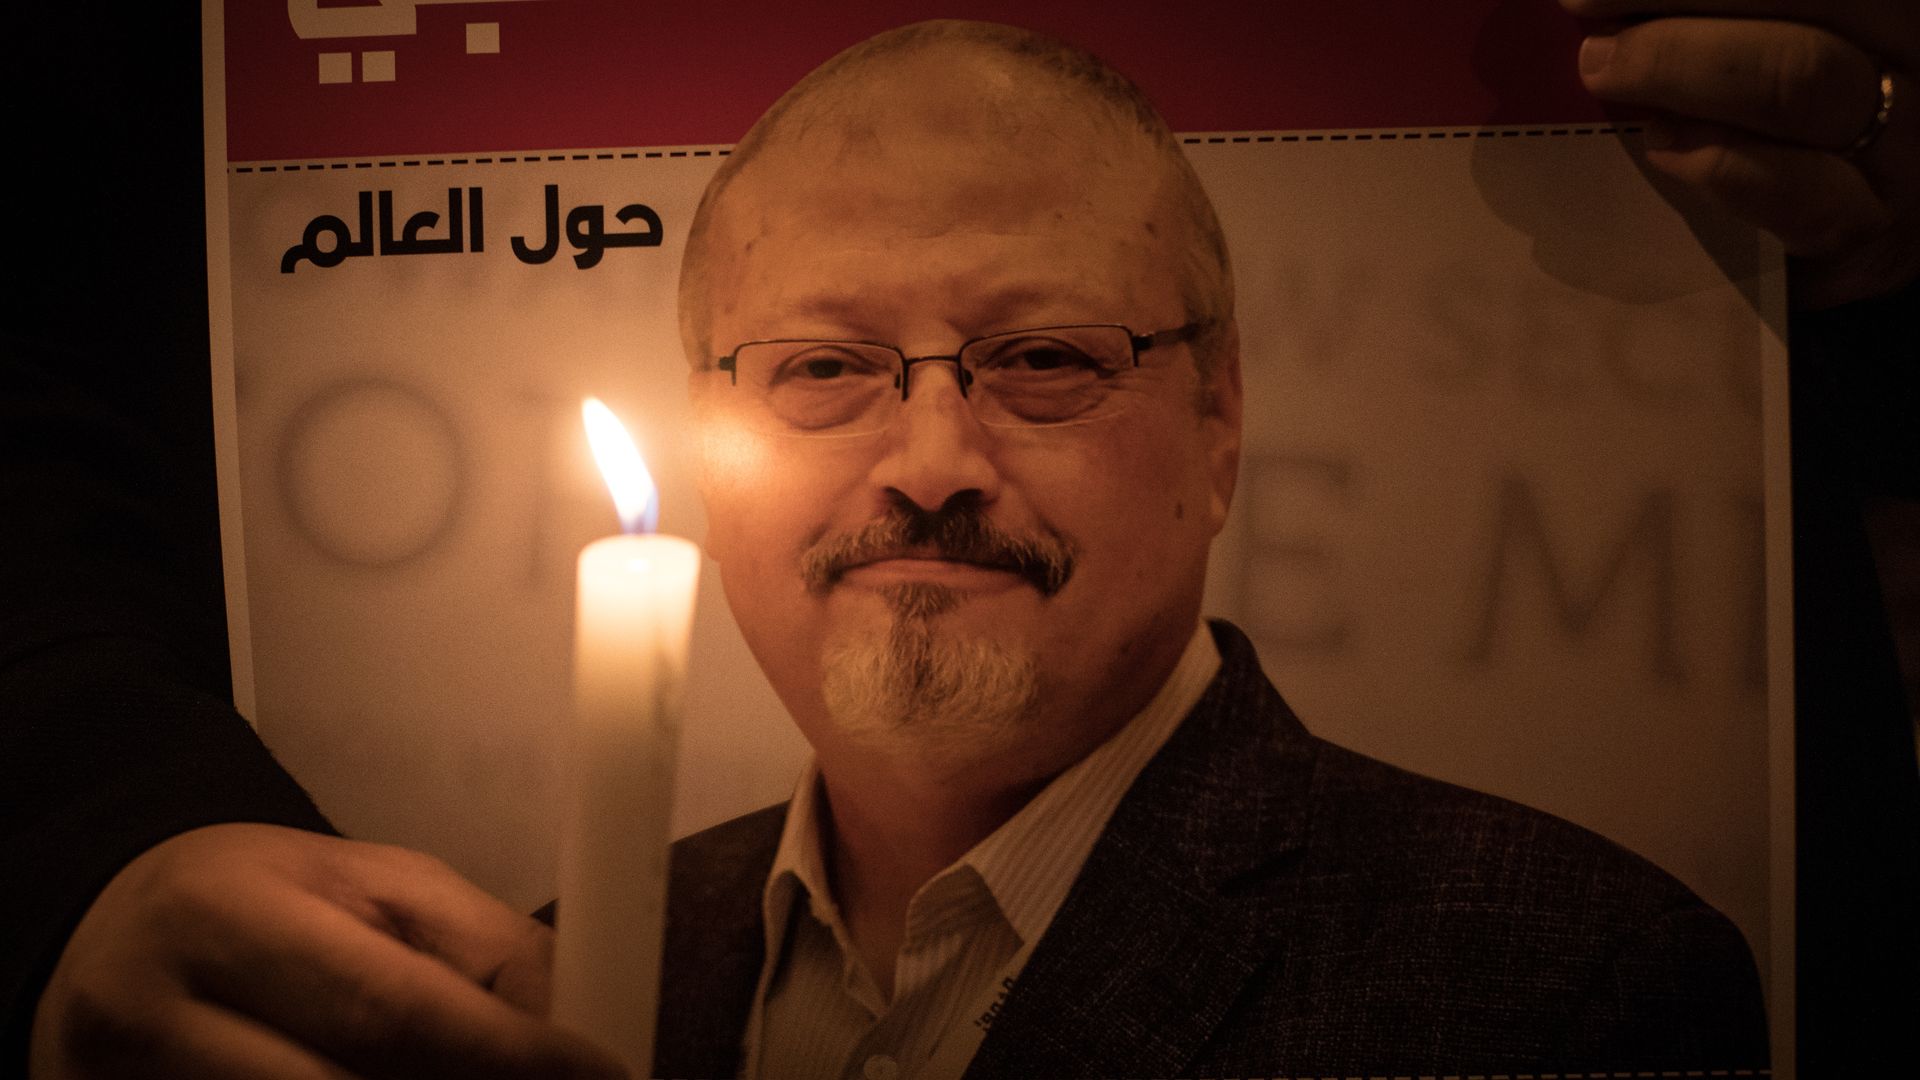 Photo of slain journalist Jamal Khashoggi at a memorial service